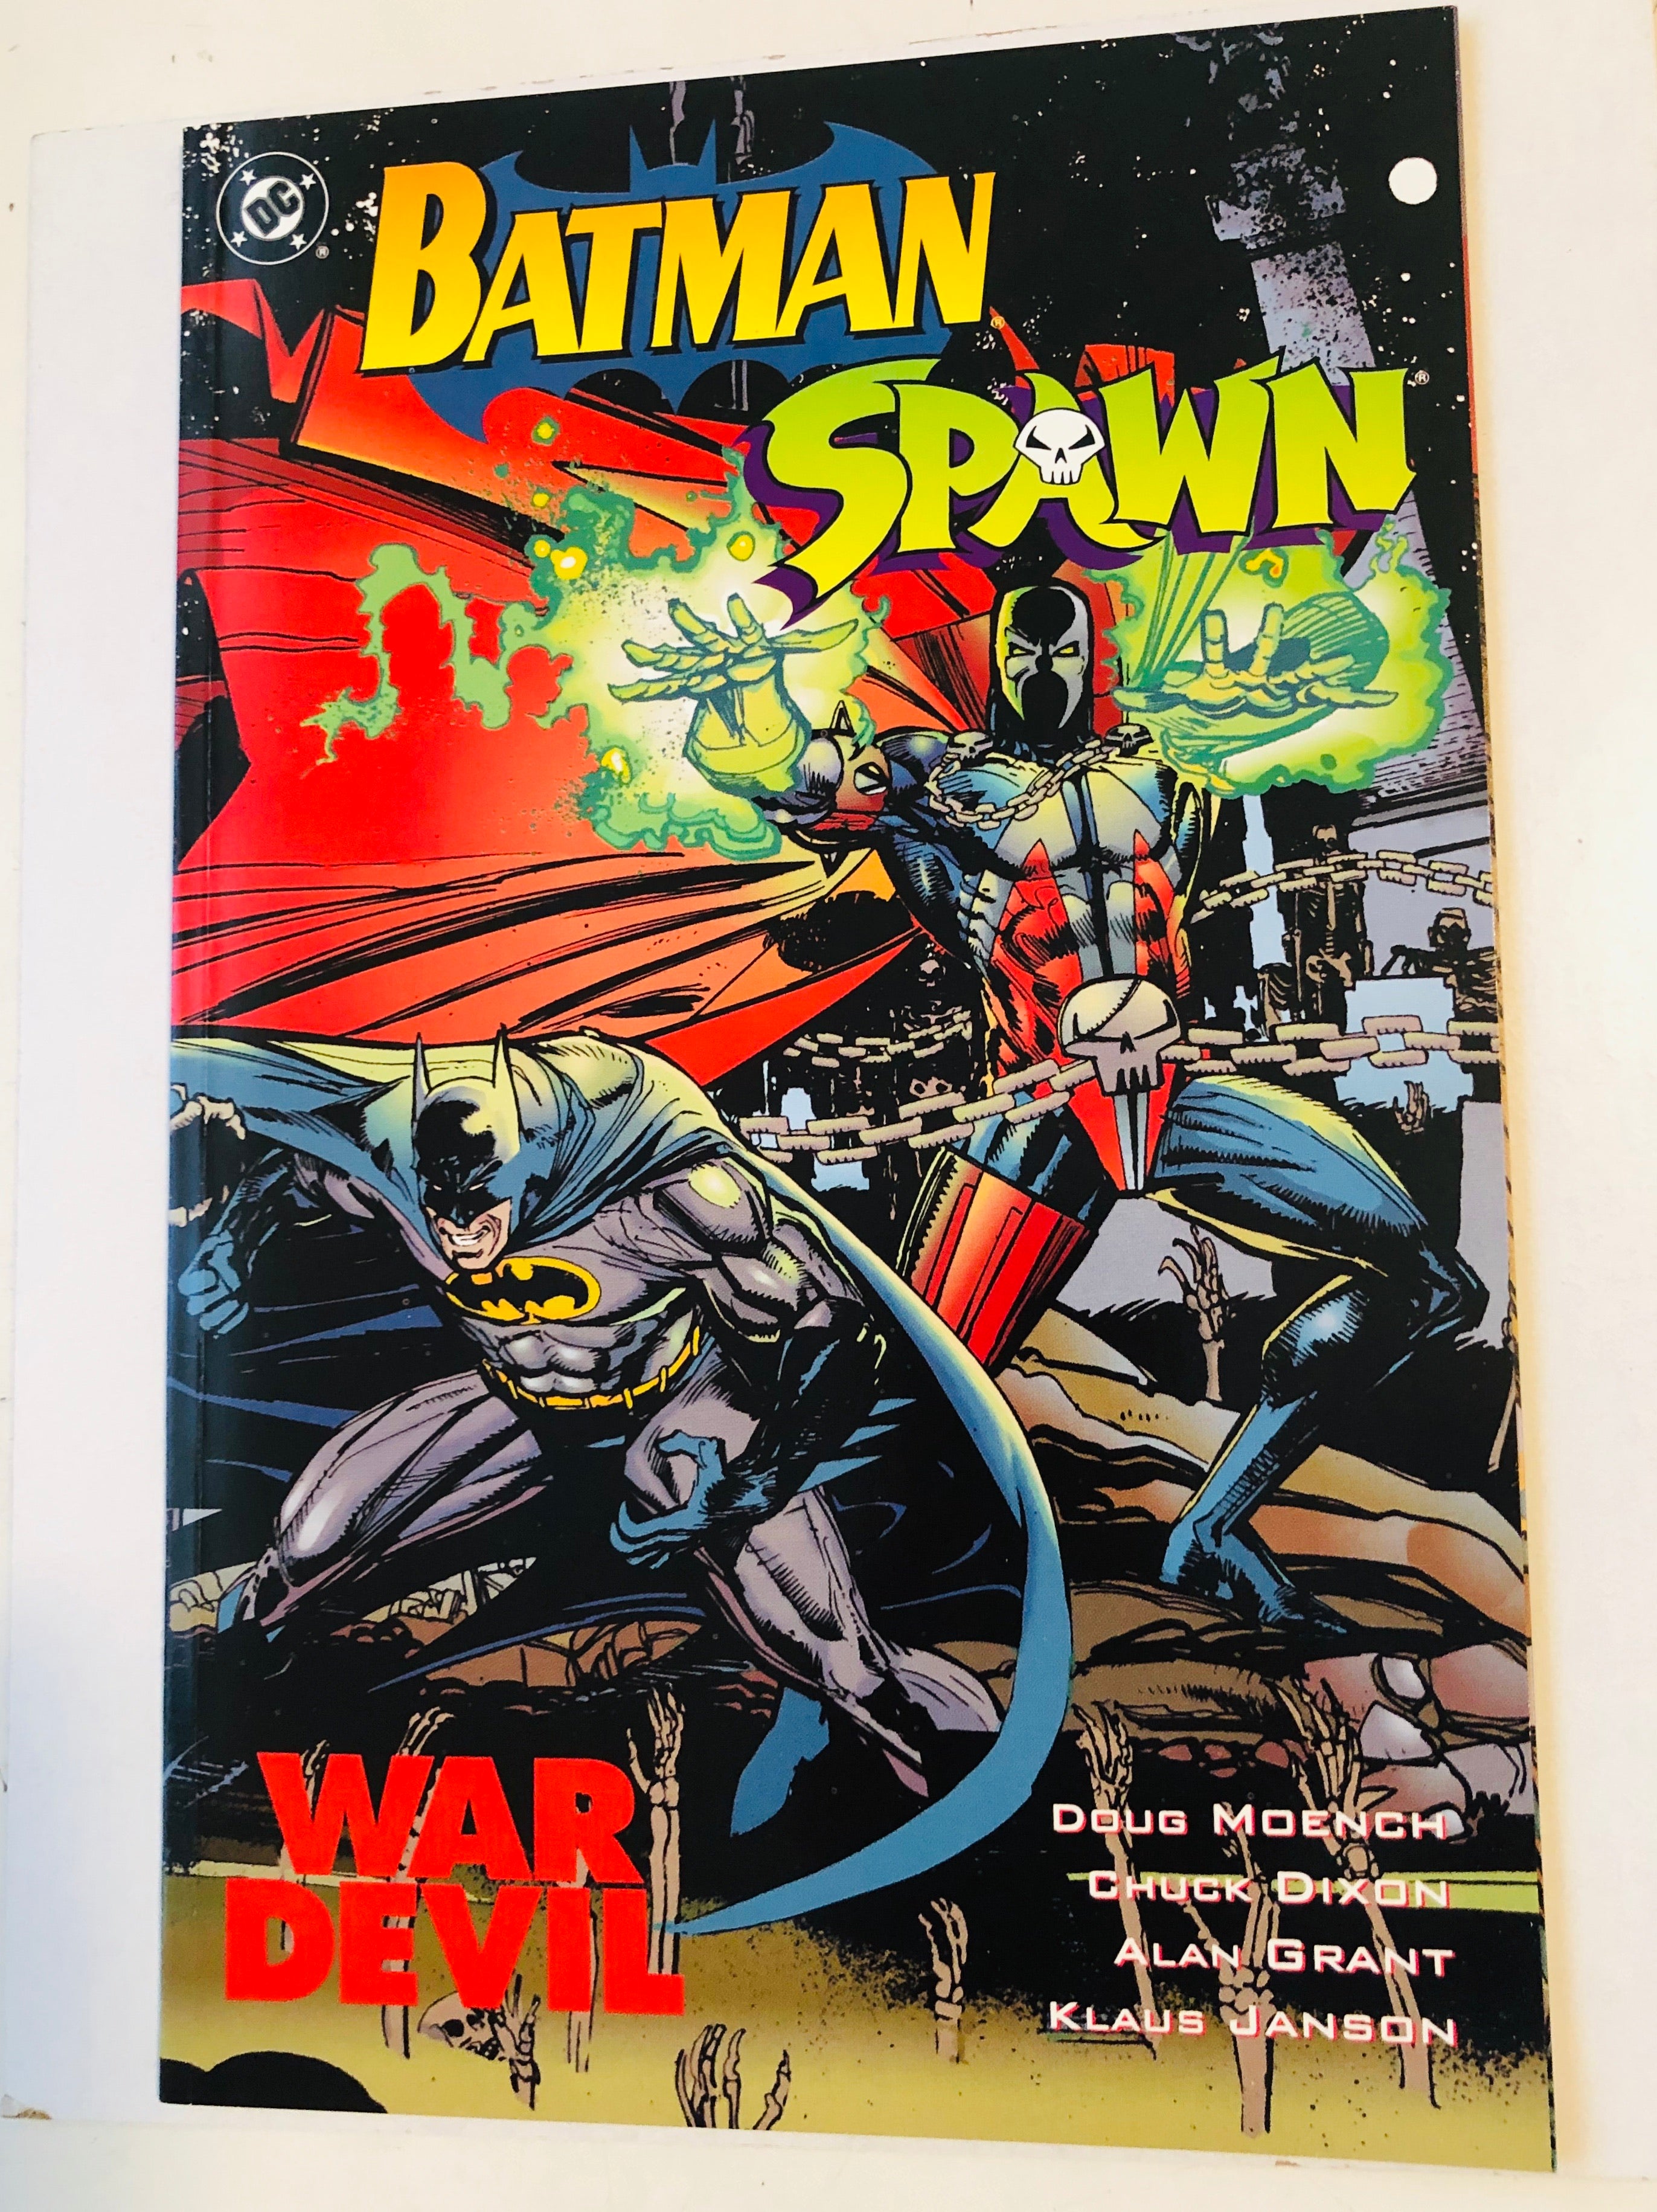 Batman vs Spawn high grade special issue comic book